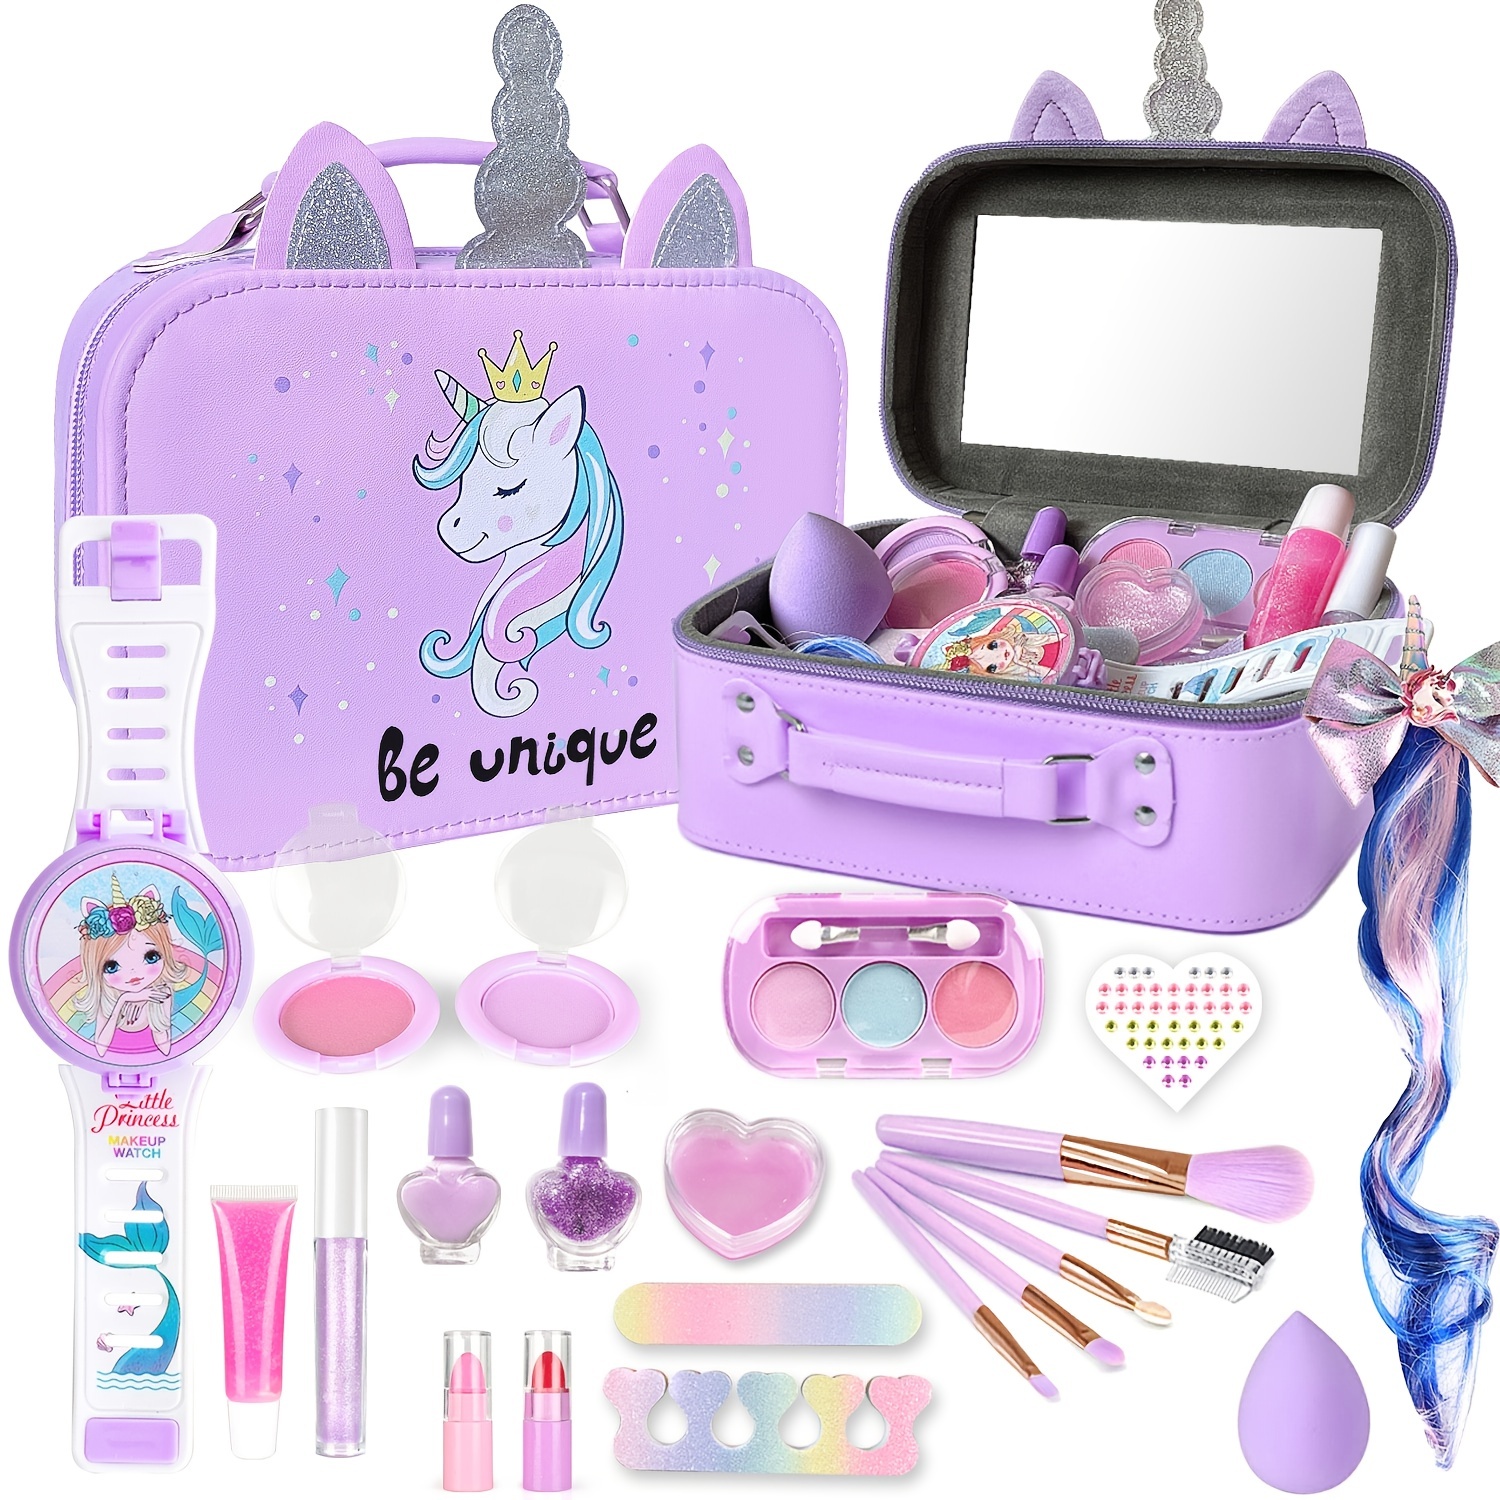 Real Makeup Girl Toys,Kids Makeup Kit for Girls - Tween Makeup Set for  Girls, Non Toxic, Play Girls Makeup Kit for Kids - Top Birthday for Ages 5,  6